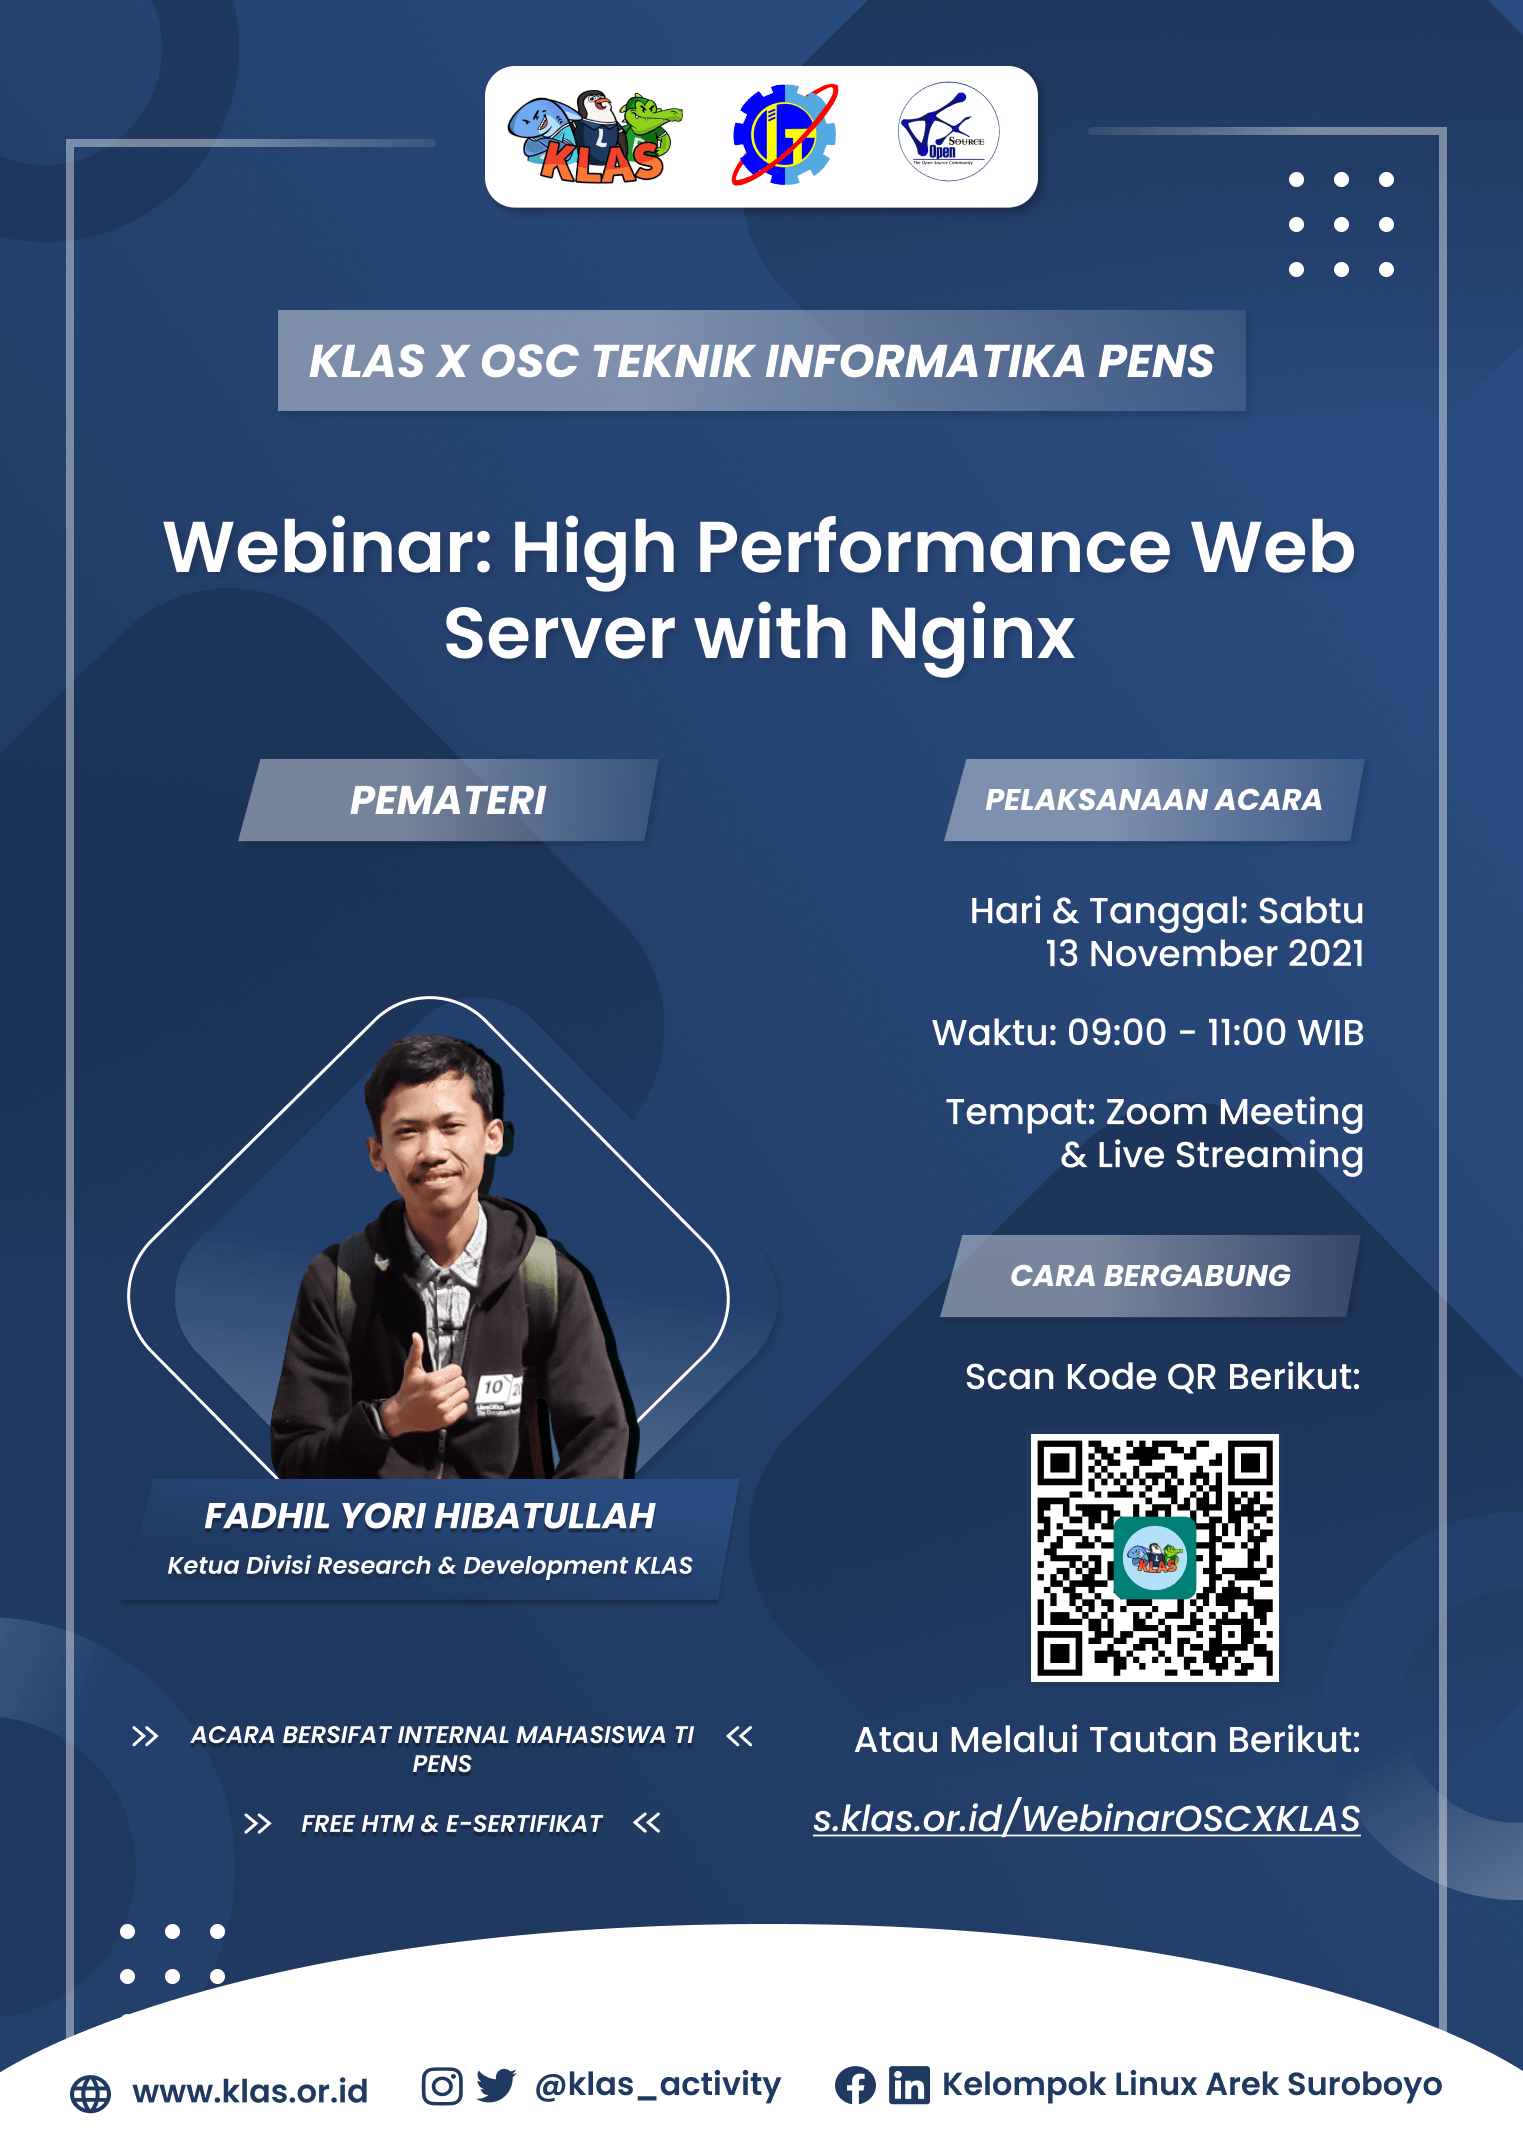 Webinar KLAS X OSC "High Performance Web Server with Nginx"